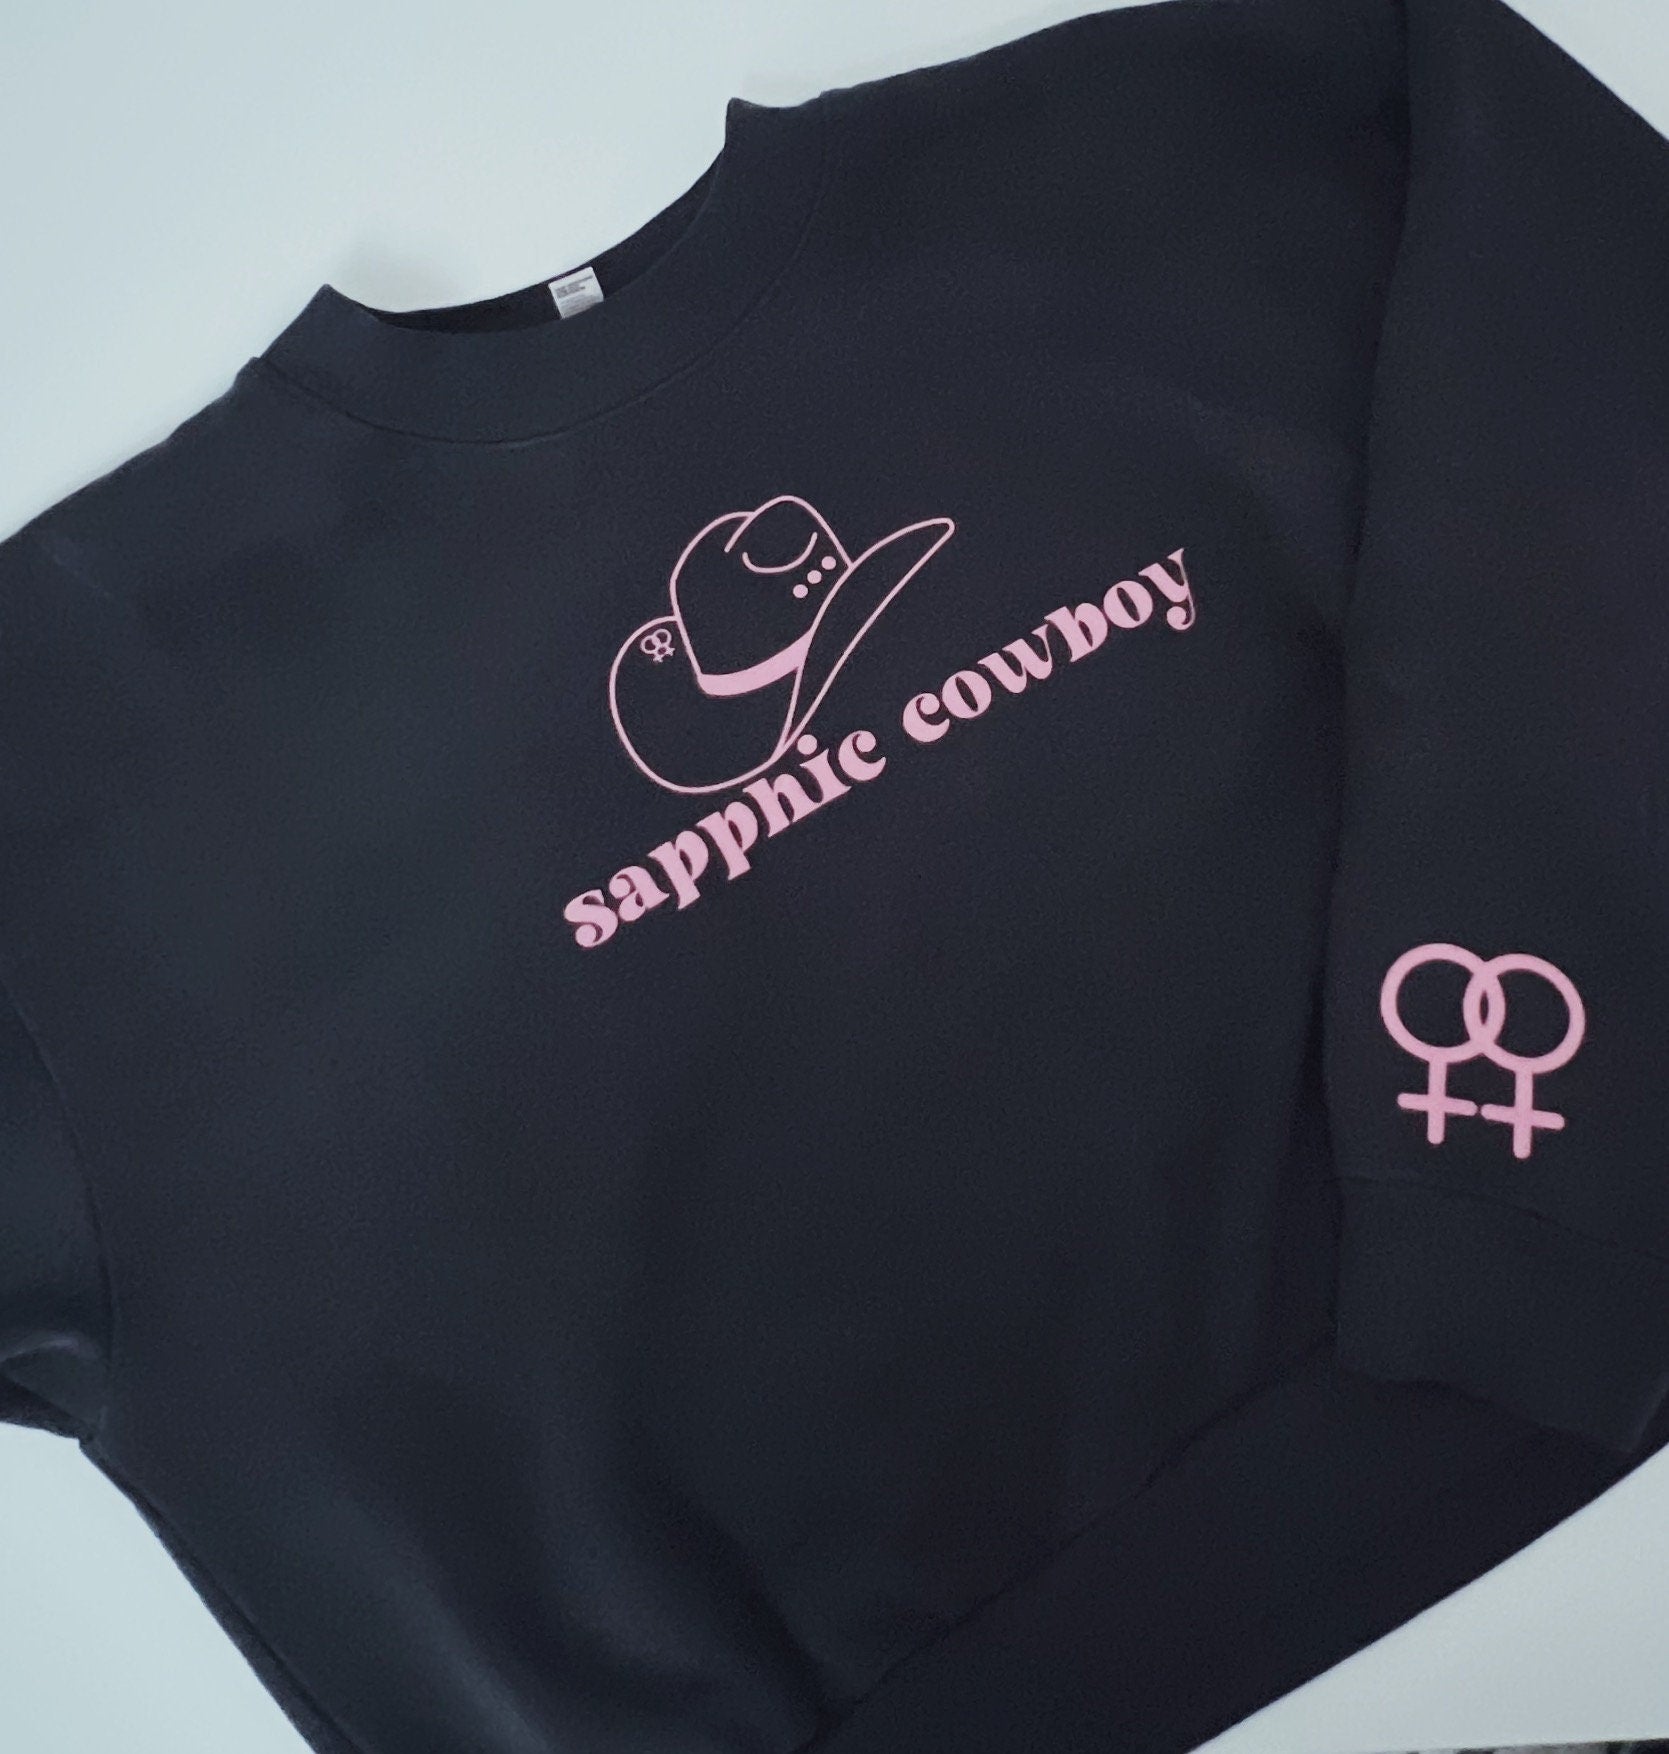 PRIDE 2022 Sapphic Cowboy Soft Black Crop Sweatshirt pink logo, soft  material, rustic style, WLW, LGBT, Genderless, Lesbian, Queer nonbinary